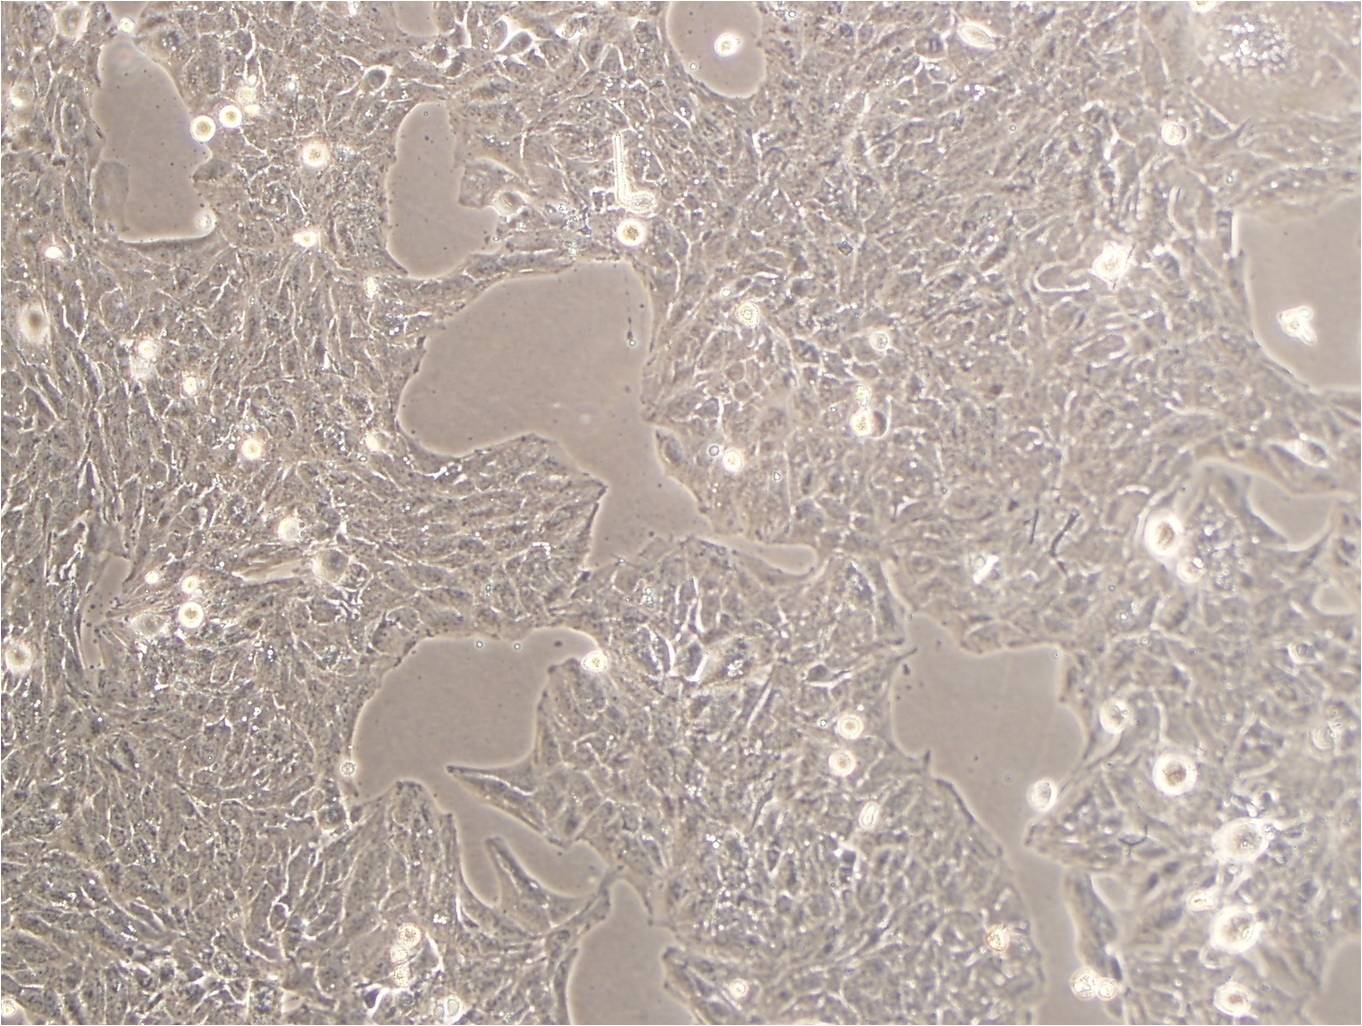 PNEC30 Cell|小鼠前列腺癌细胞,PNEC30 Cell